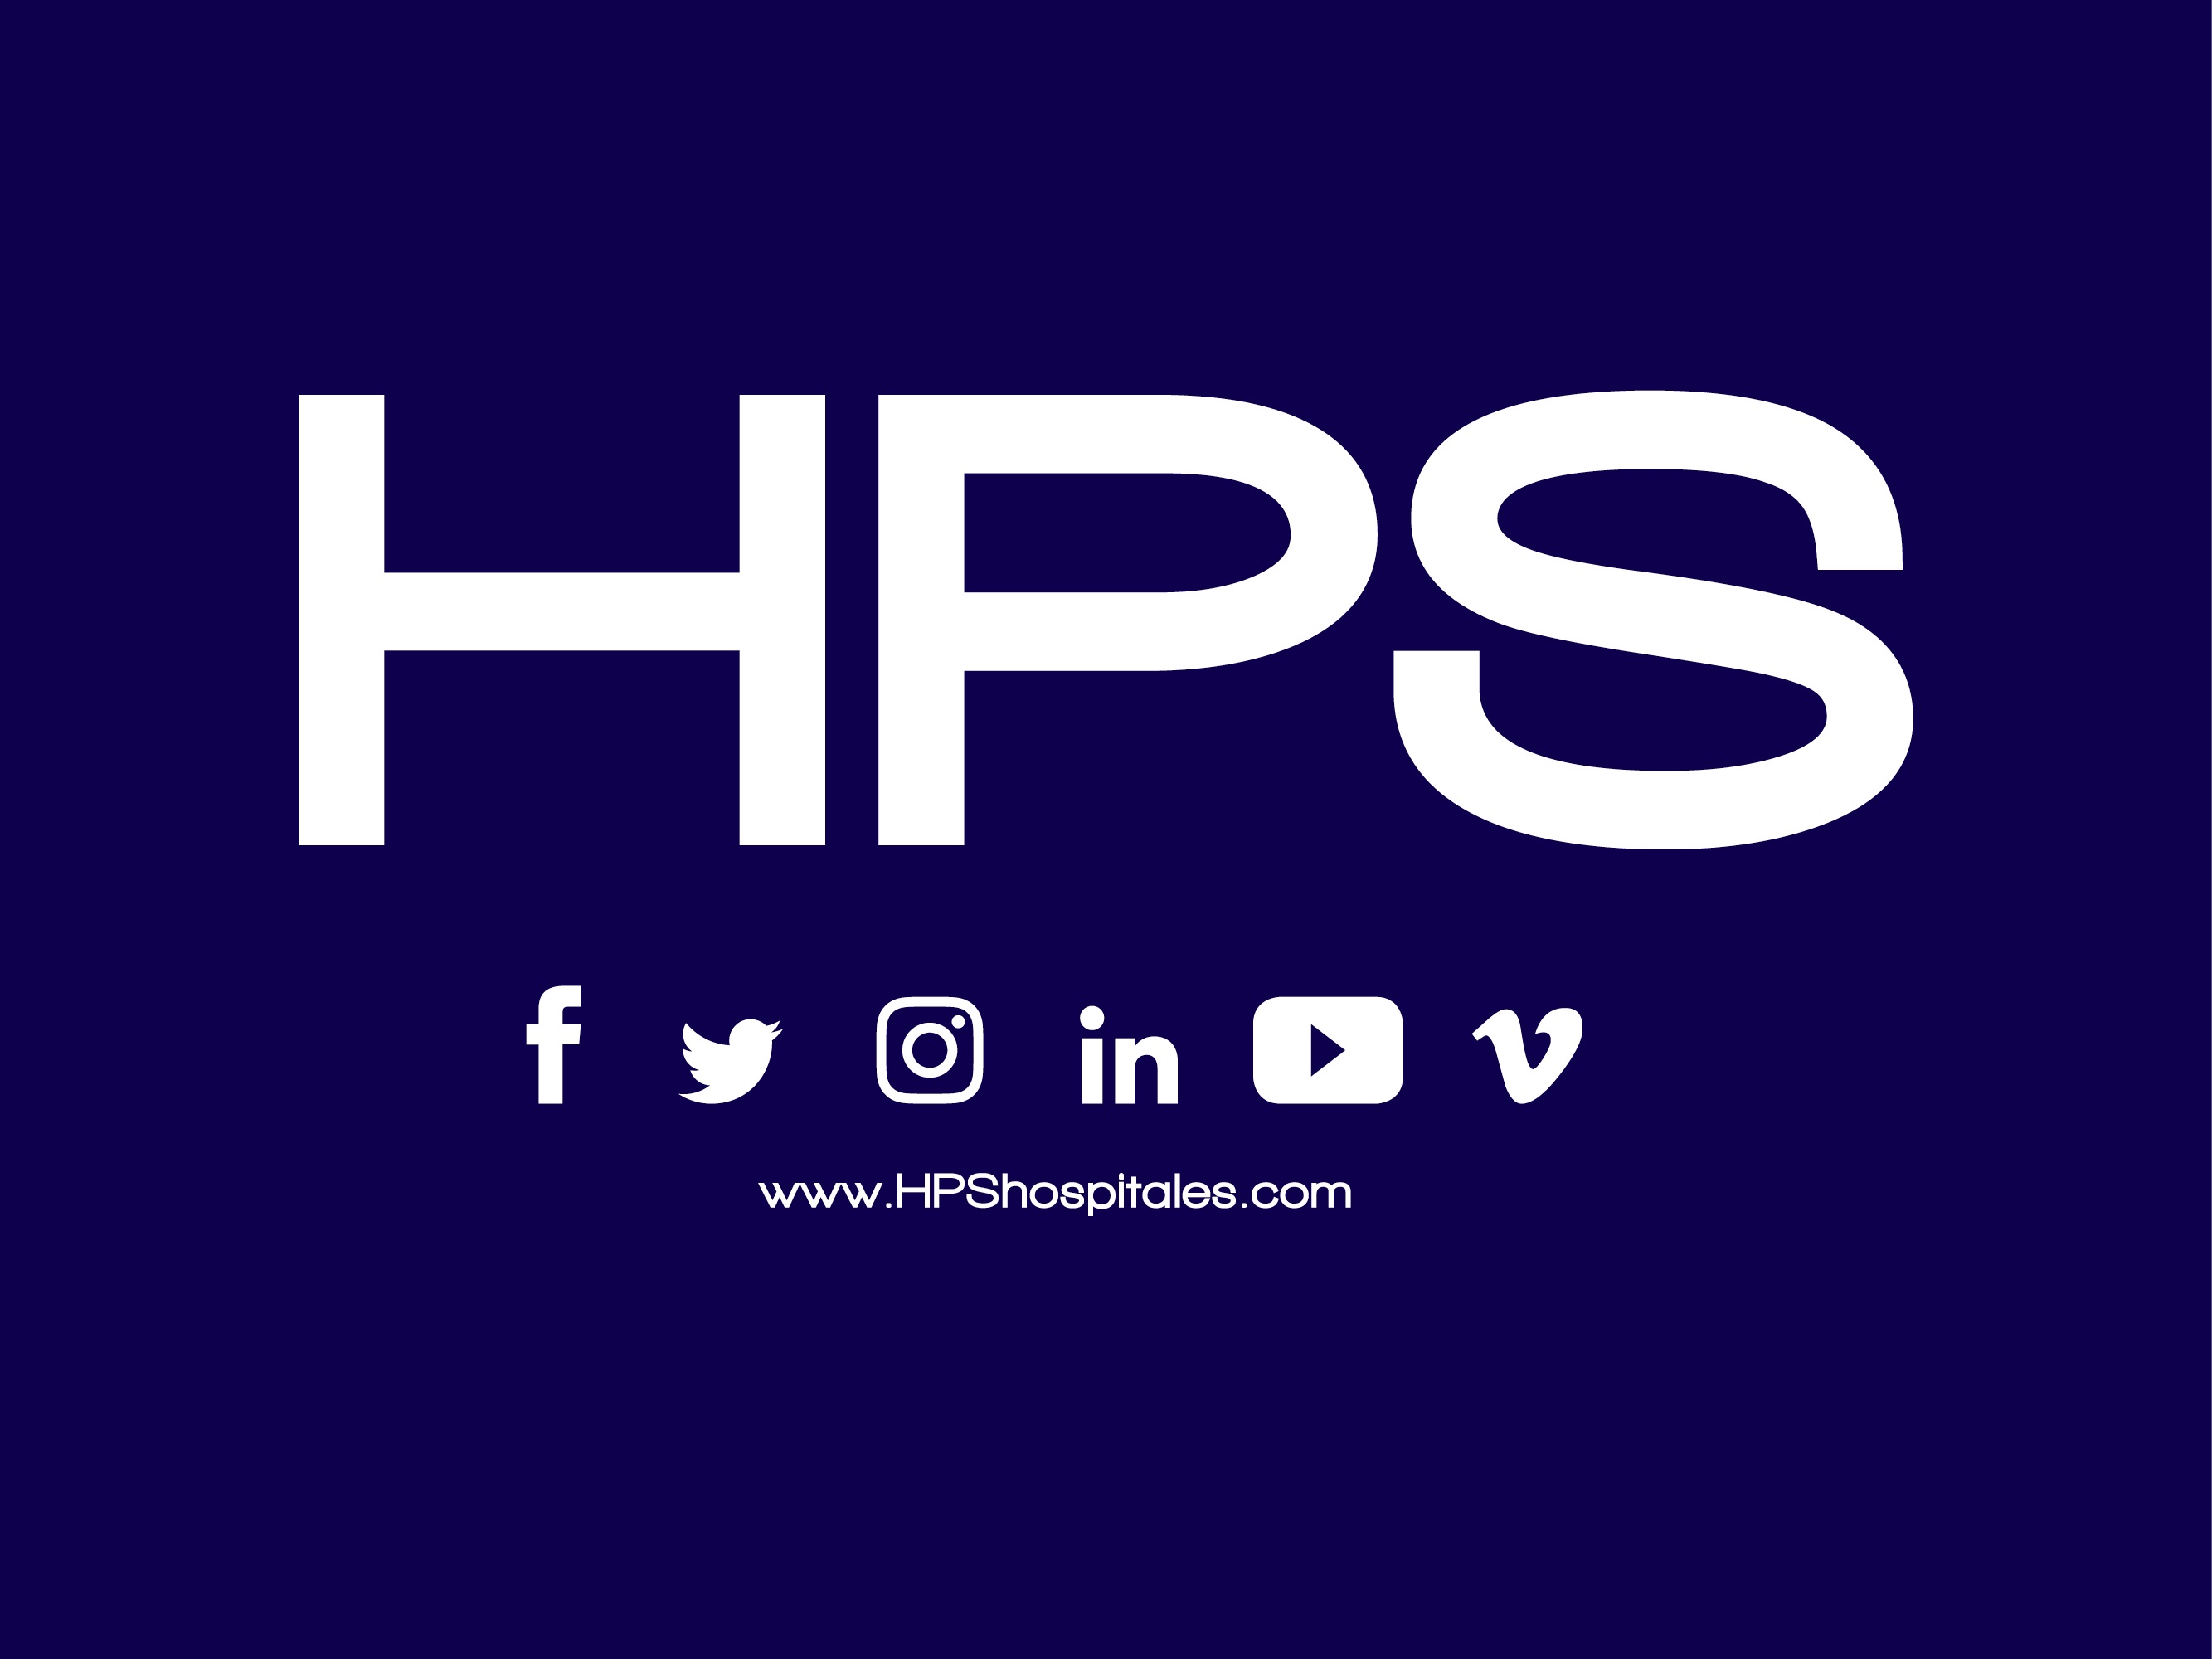 (c) Hpshospitales.com